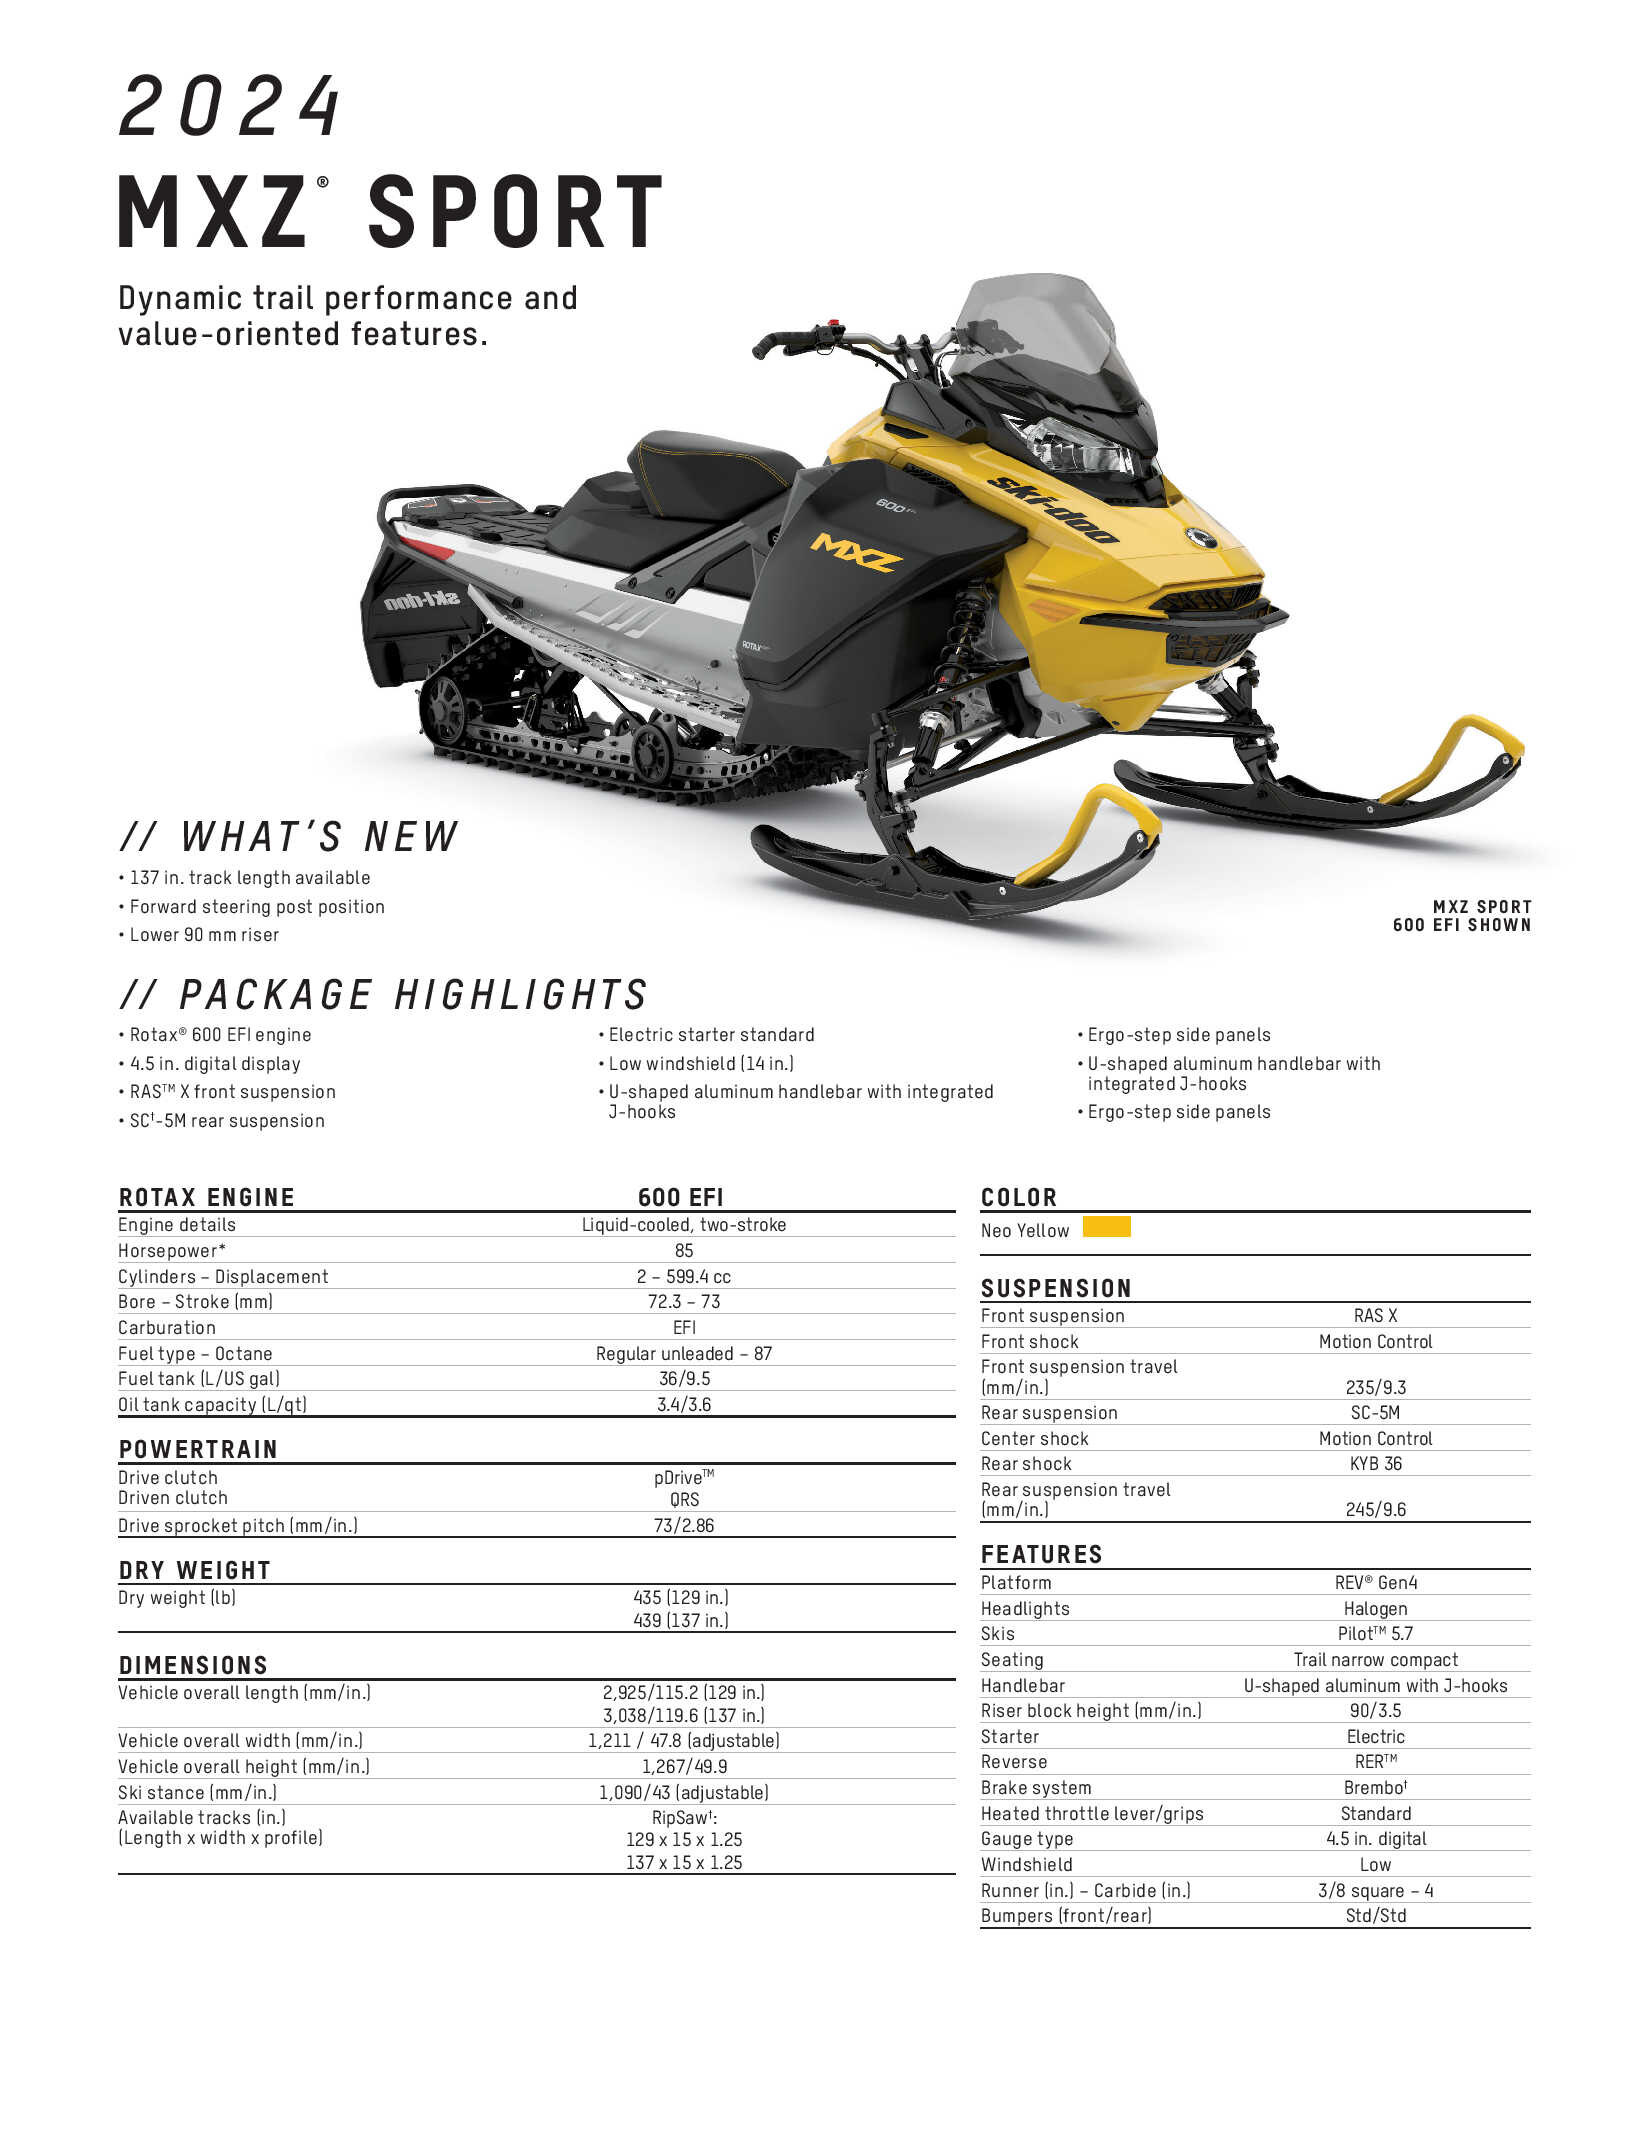 2024 Ski-Doo MXZ Sport Specs